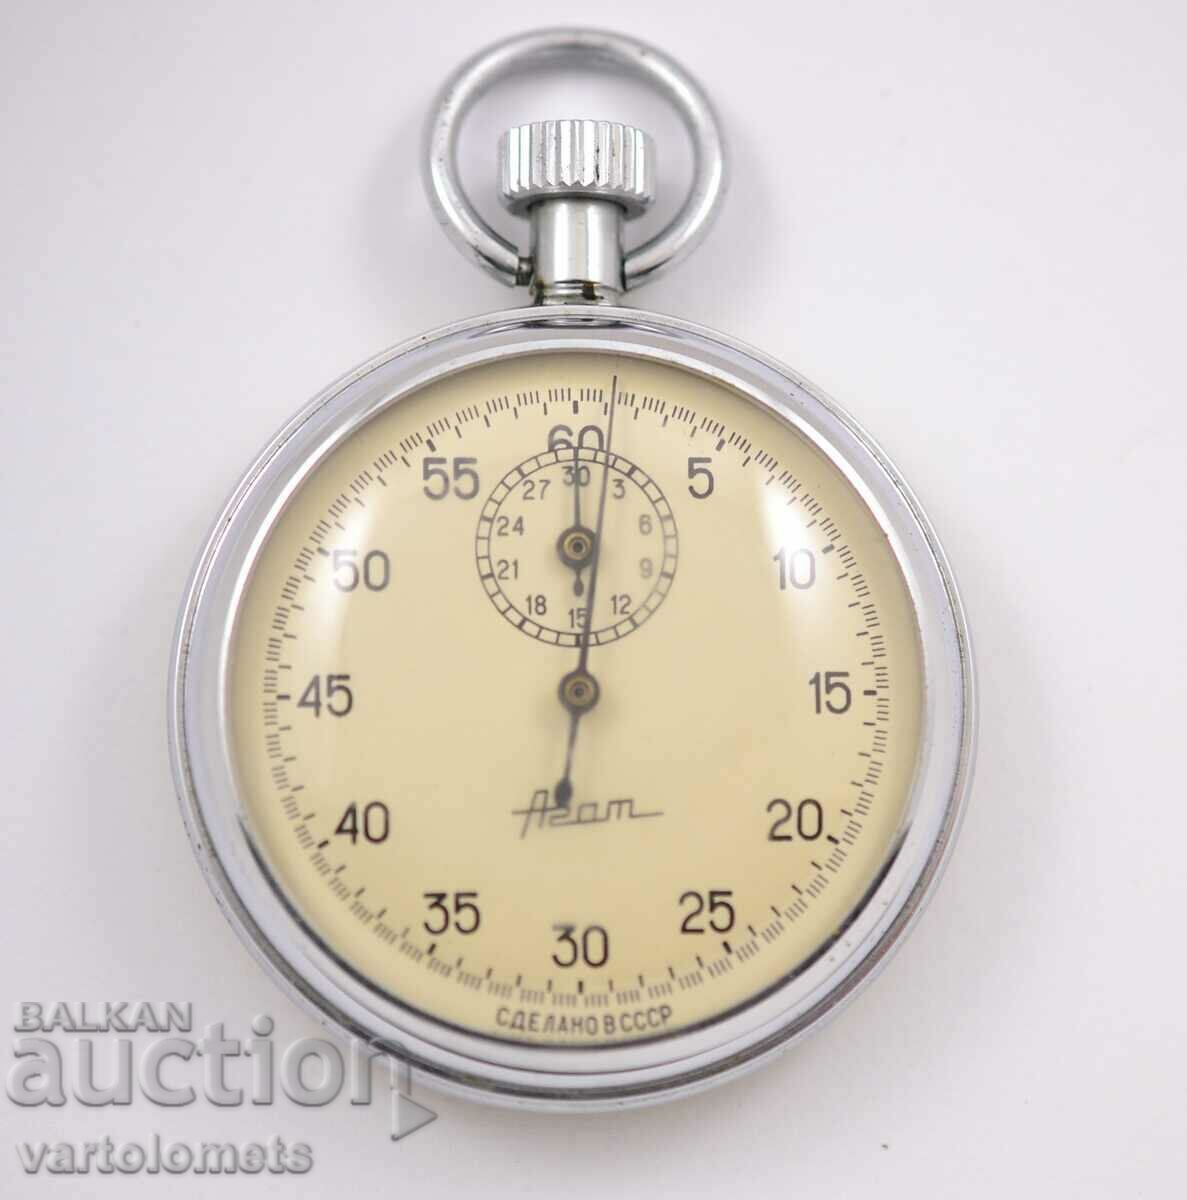 Chronometer Agate USSR - works